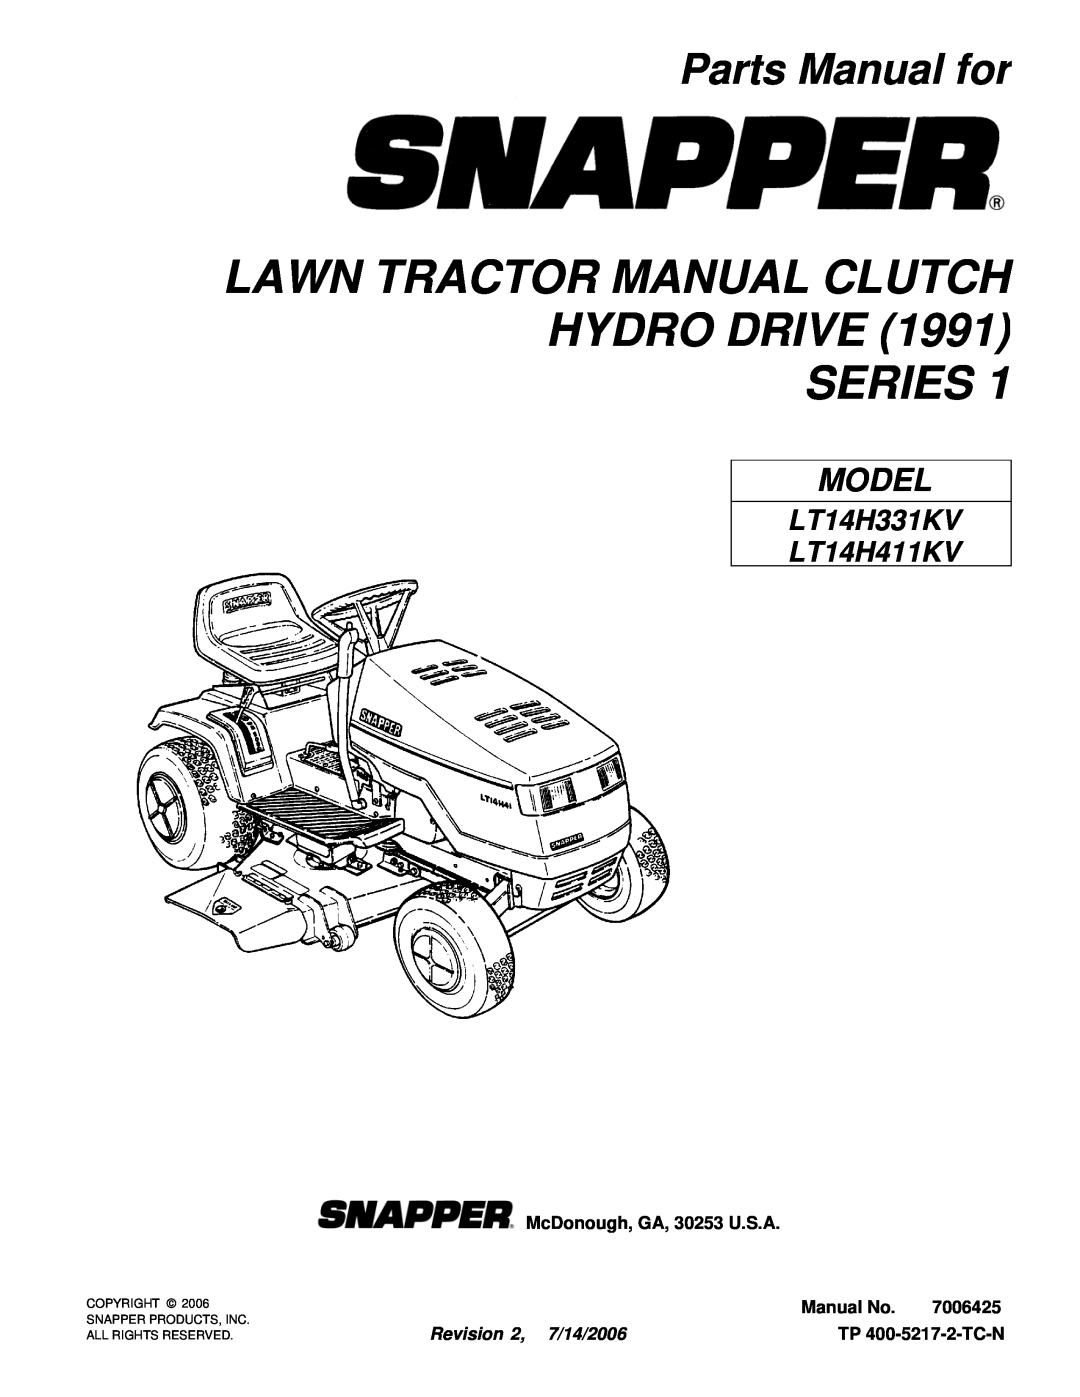 Snapper manual Lawn Tractor Manual Clutch Hydro Drive Series, Parts Manual for, Model, LT14H331KV LT14H411KV, Manual No 